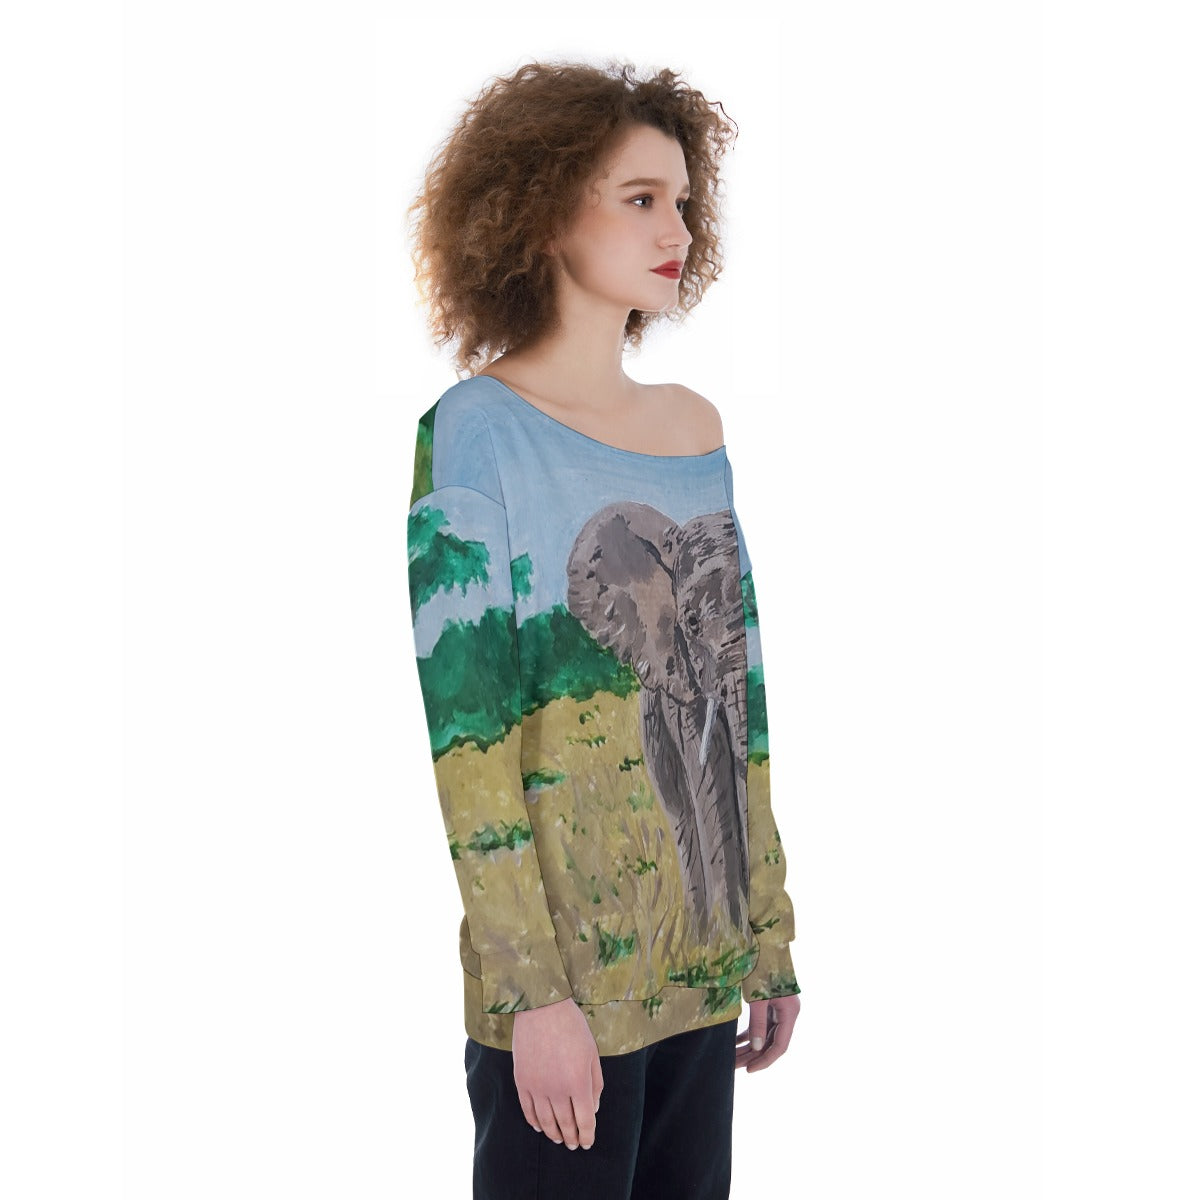 Oversized Women's Elephant Off-Shoulder Sweatshirt